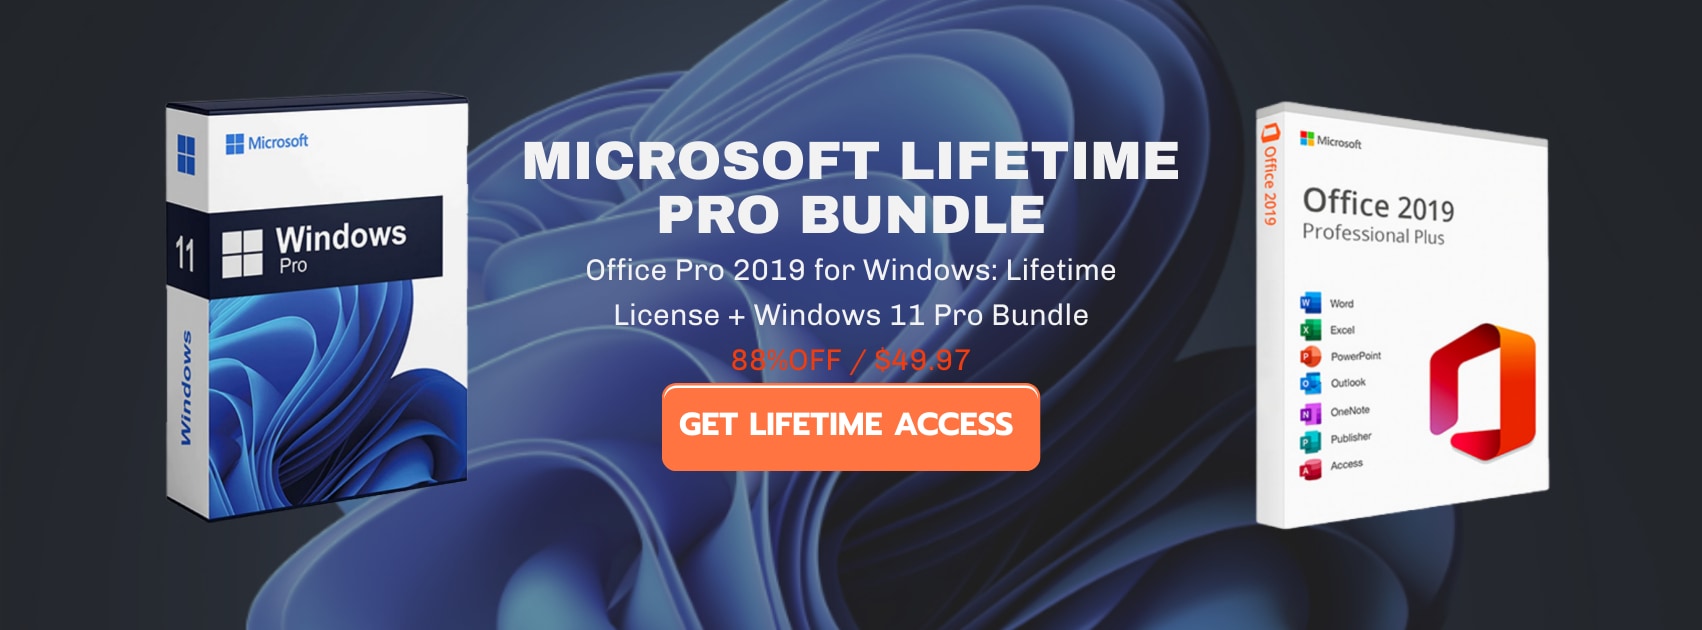 Microsoft Lifetime Pro Bundle Low Price